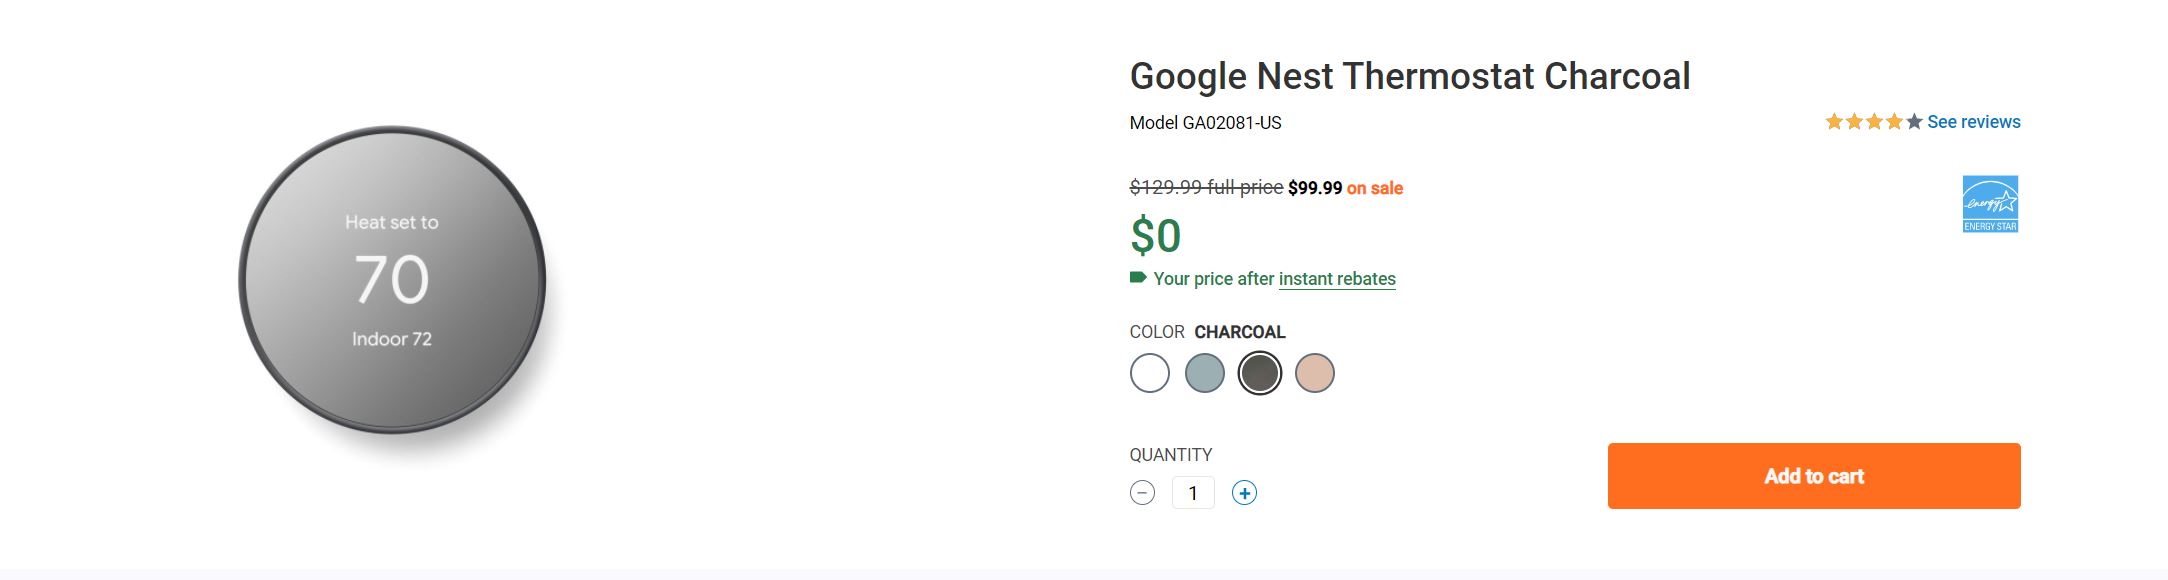 PSE&G Marketplace - Google Nest Thermostat - 0$ - After 100$ instant rebate - NJ Only